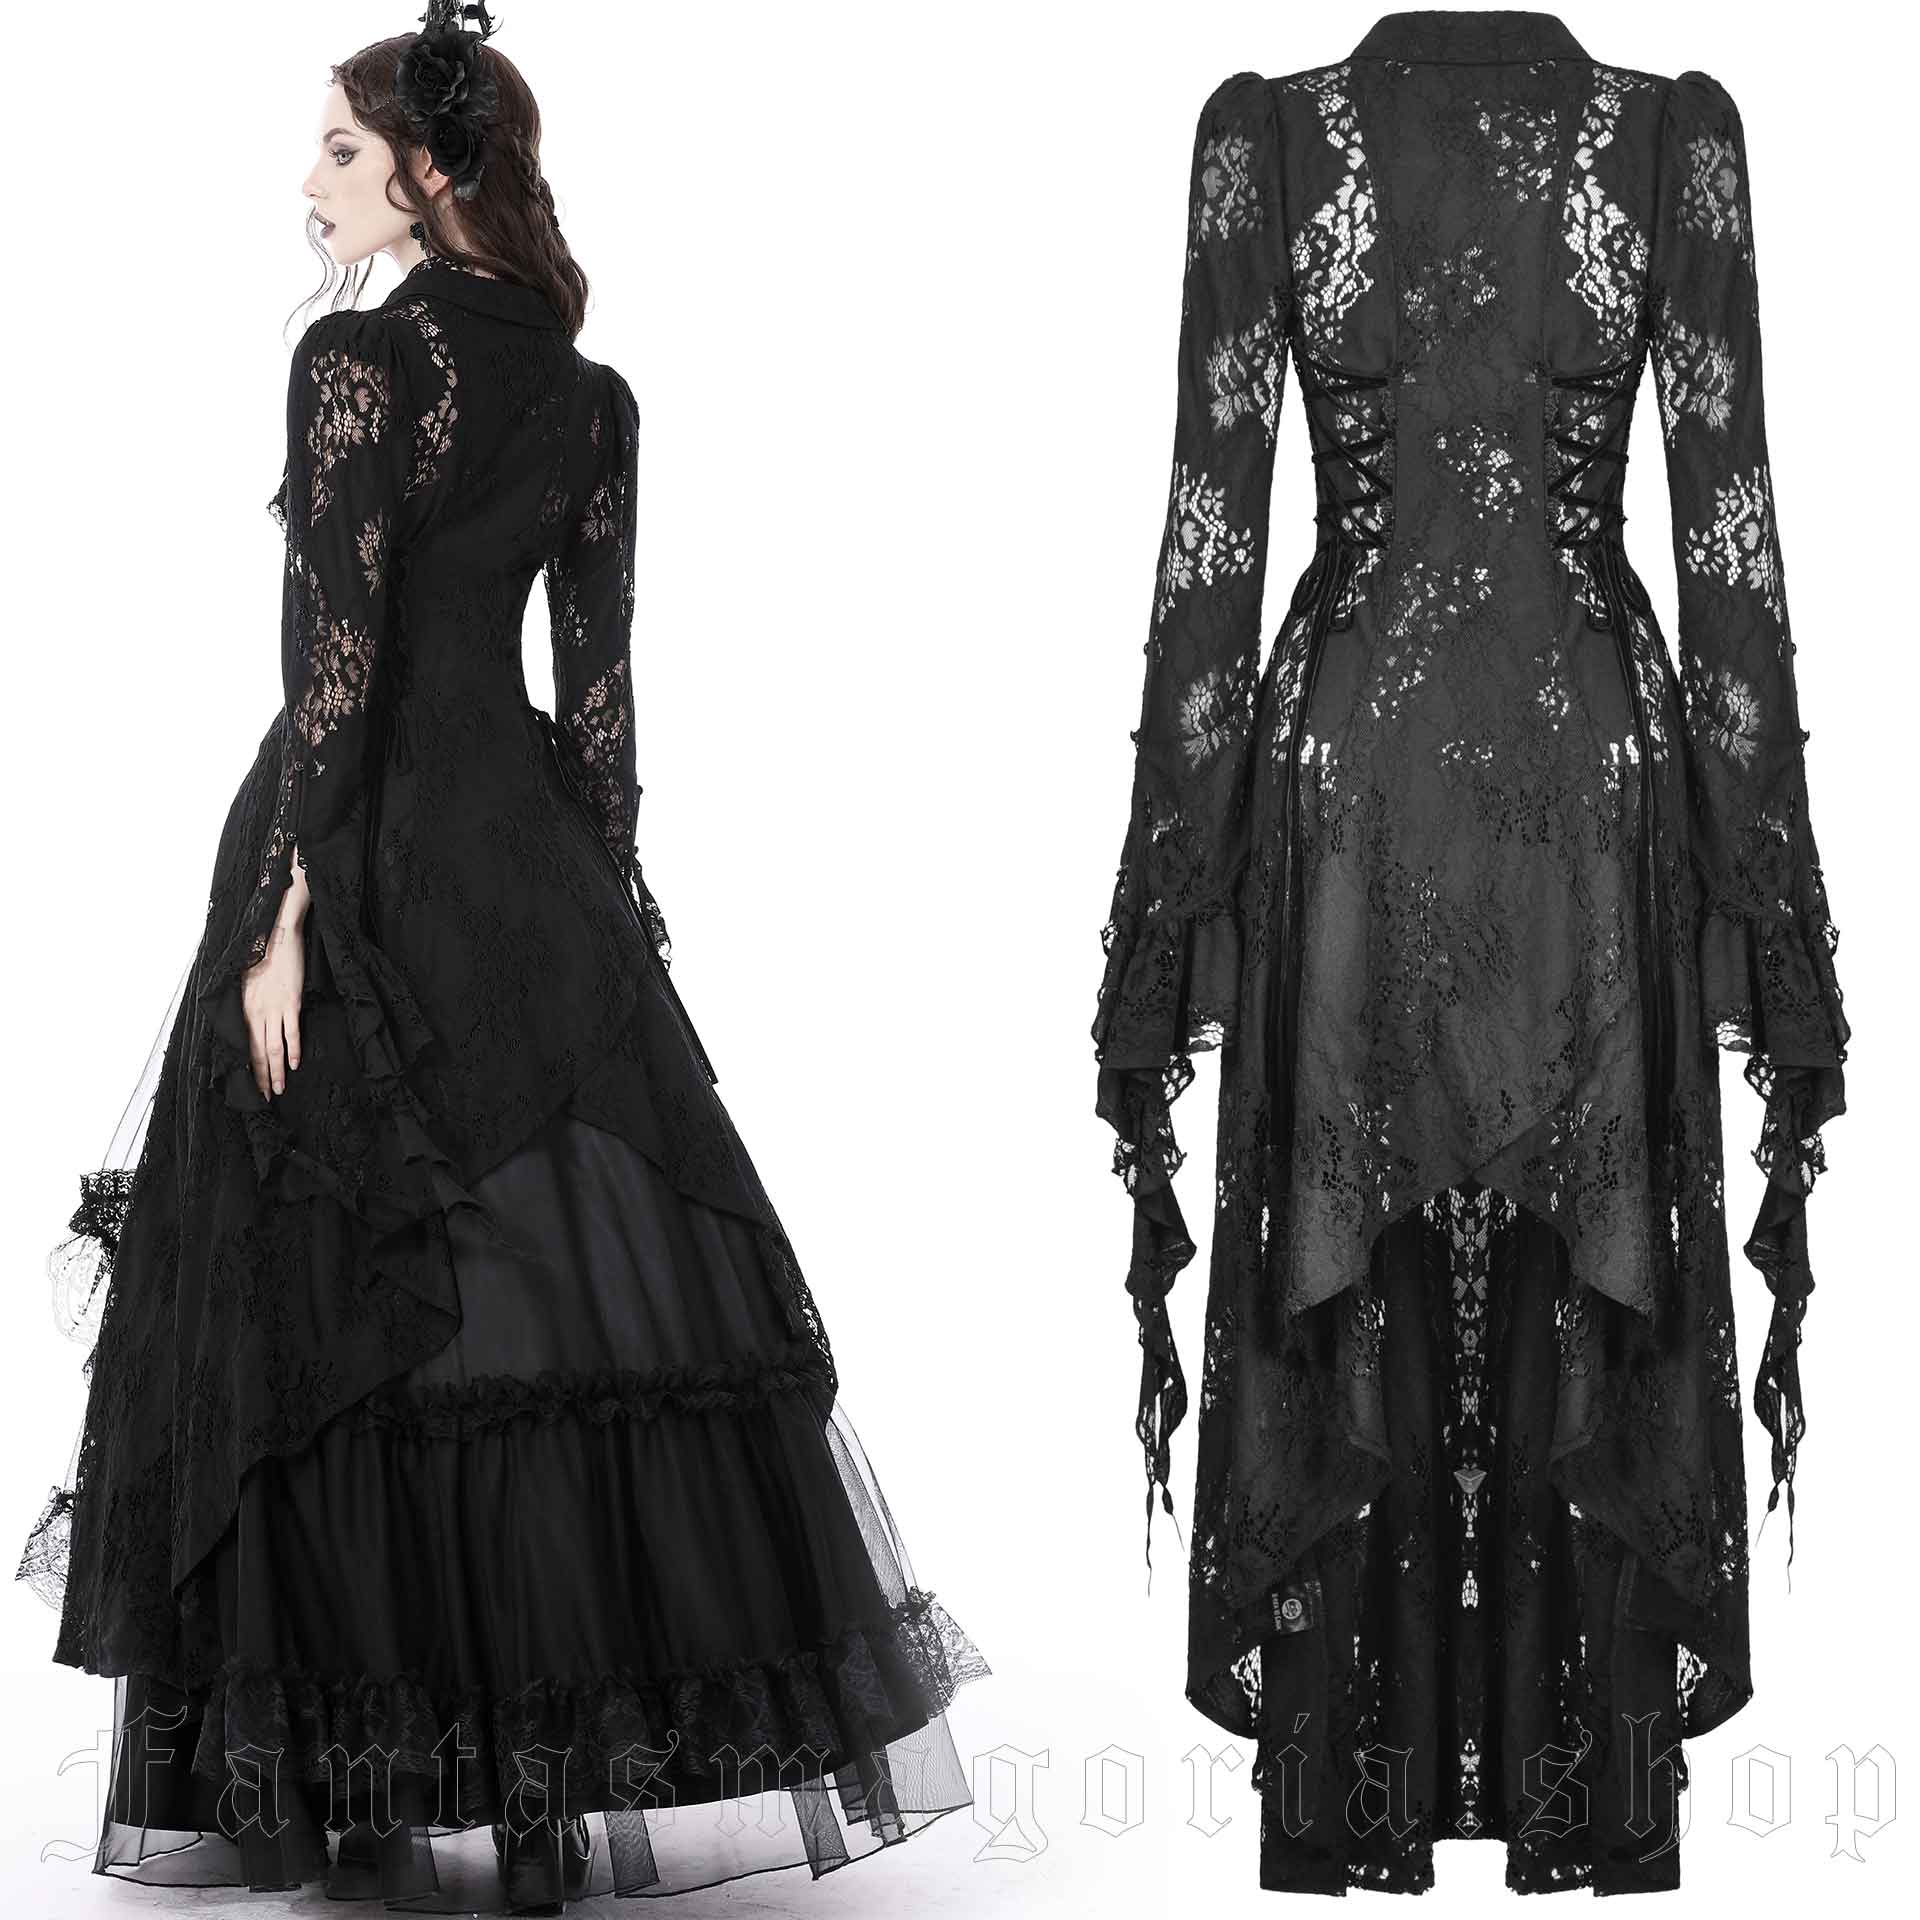 Lady Gothic Dress Ruffle Mesh Puff Sleeve Bow Steampunk Cosplay Irregular  Retro | eBay